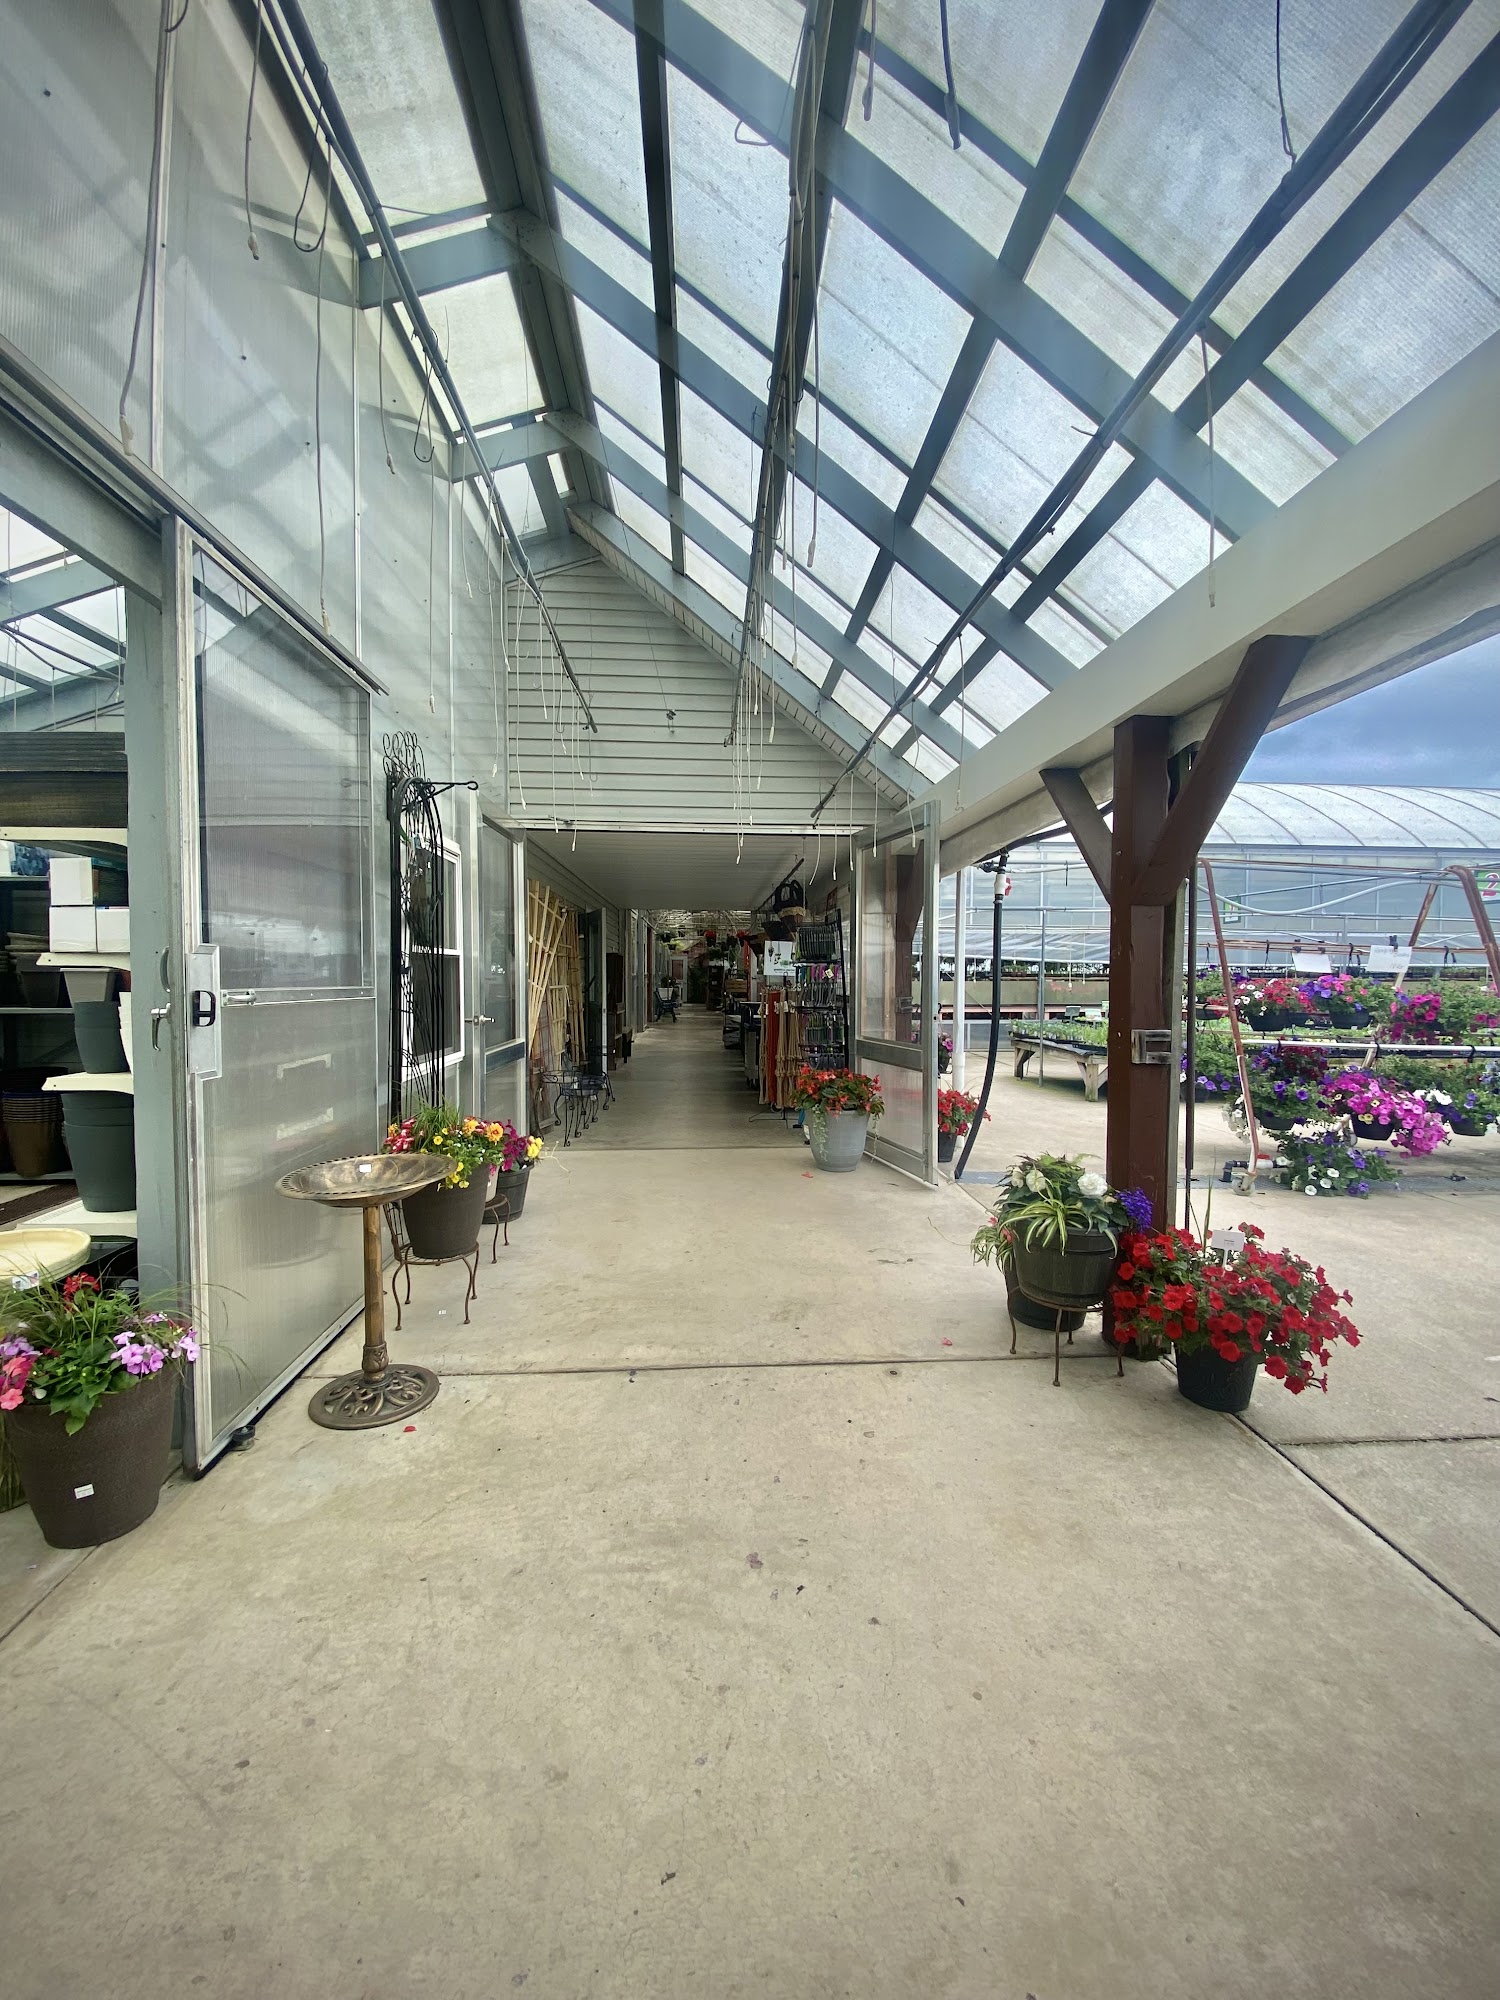 Peachey's Greenhouse 2434 W Back Mountain Rd, Belleville Pennsylvania 17004